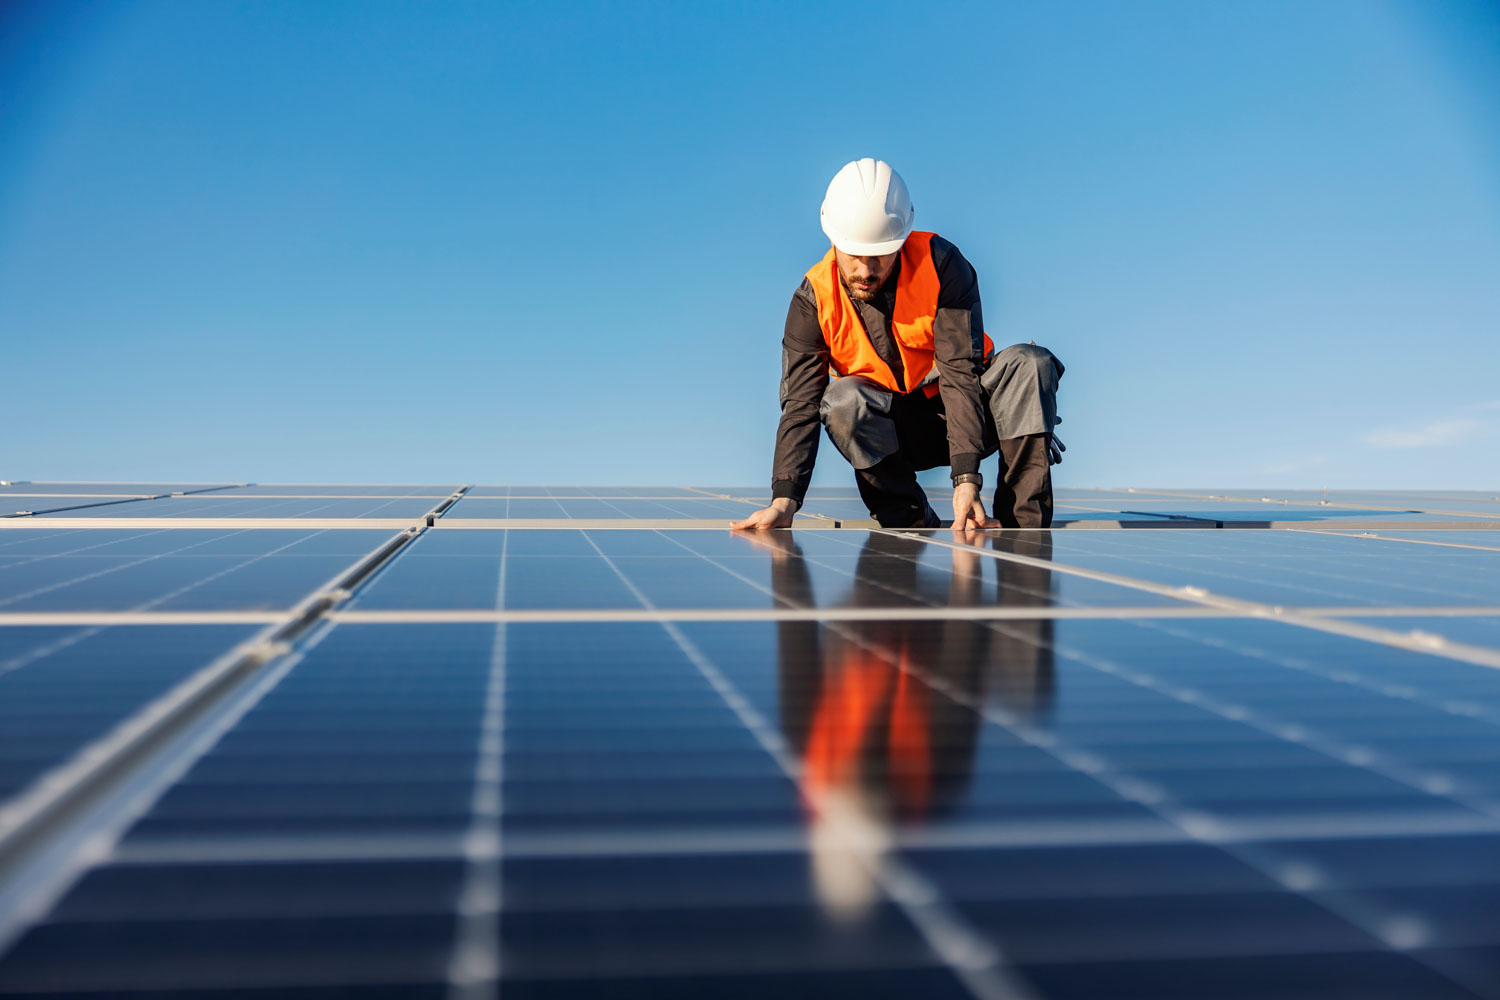 SC & GA residential solar panel installation, provided by Solar Energy Partners.